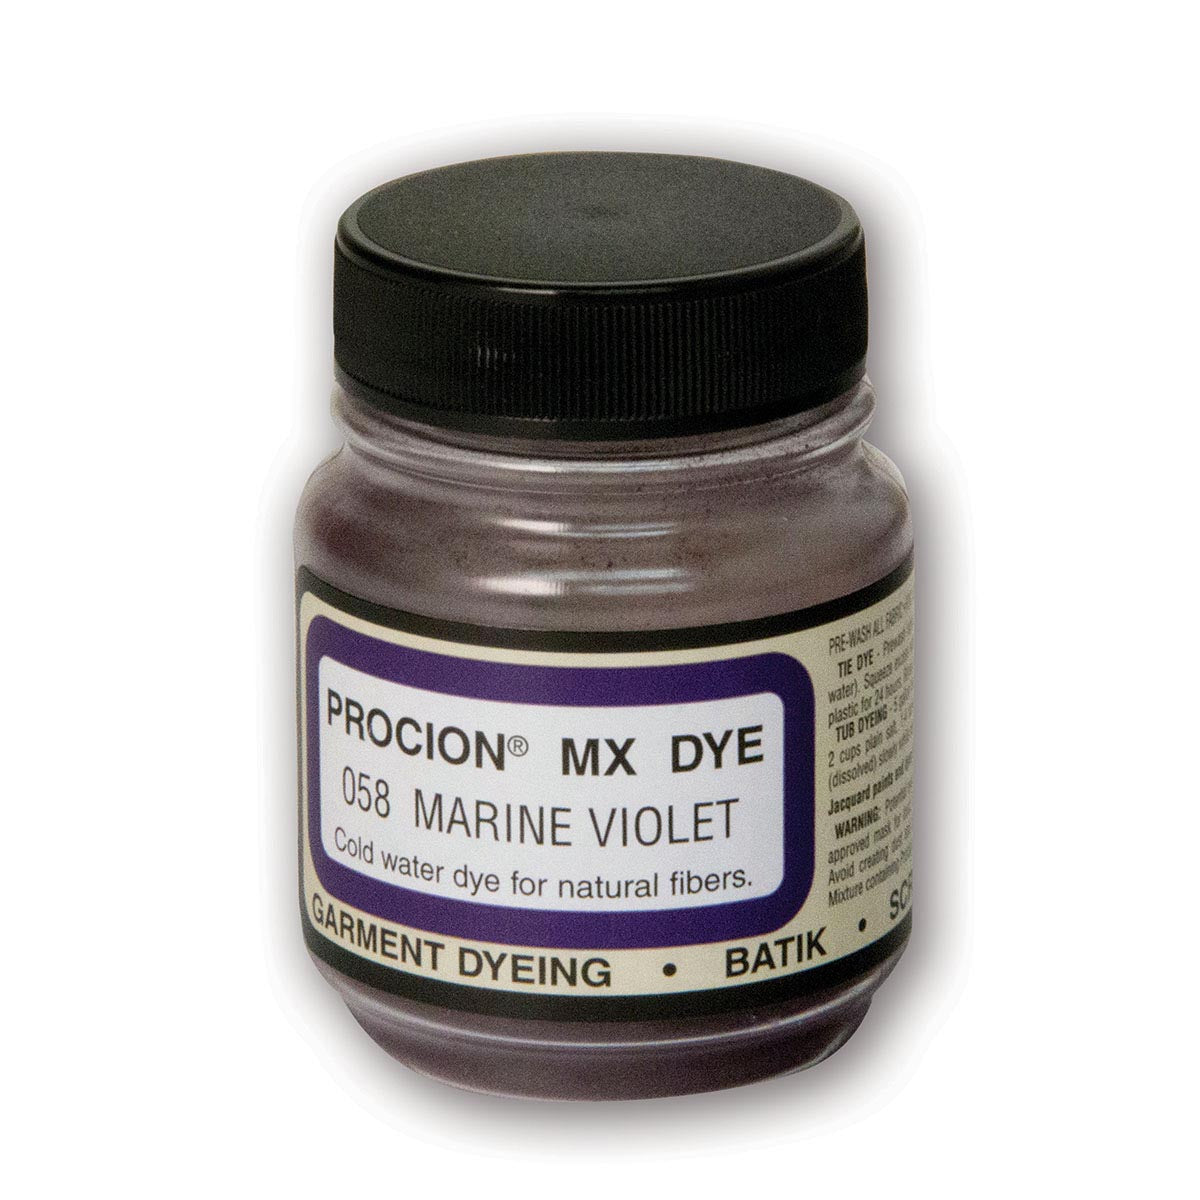 Jacquard - Procion MX Dye - Fabric Textile - Marine Violet 058